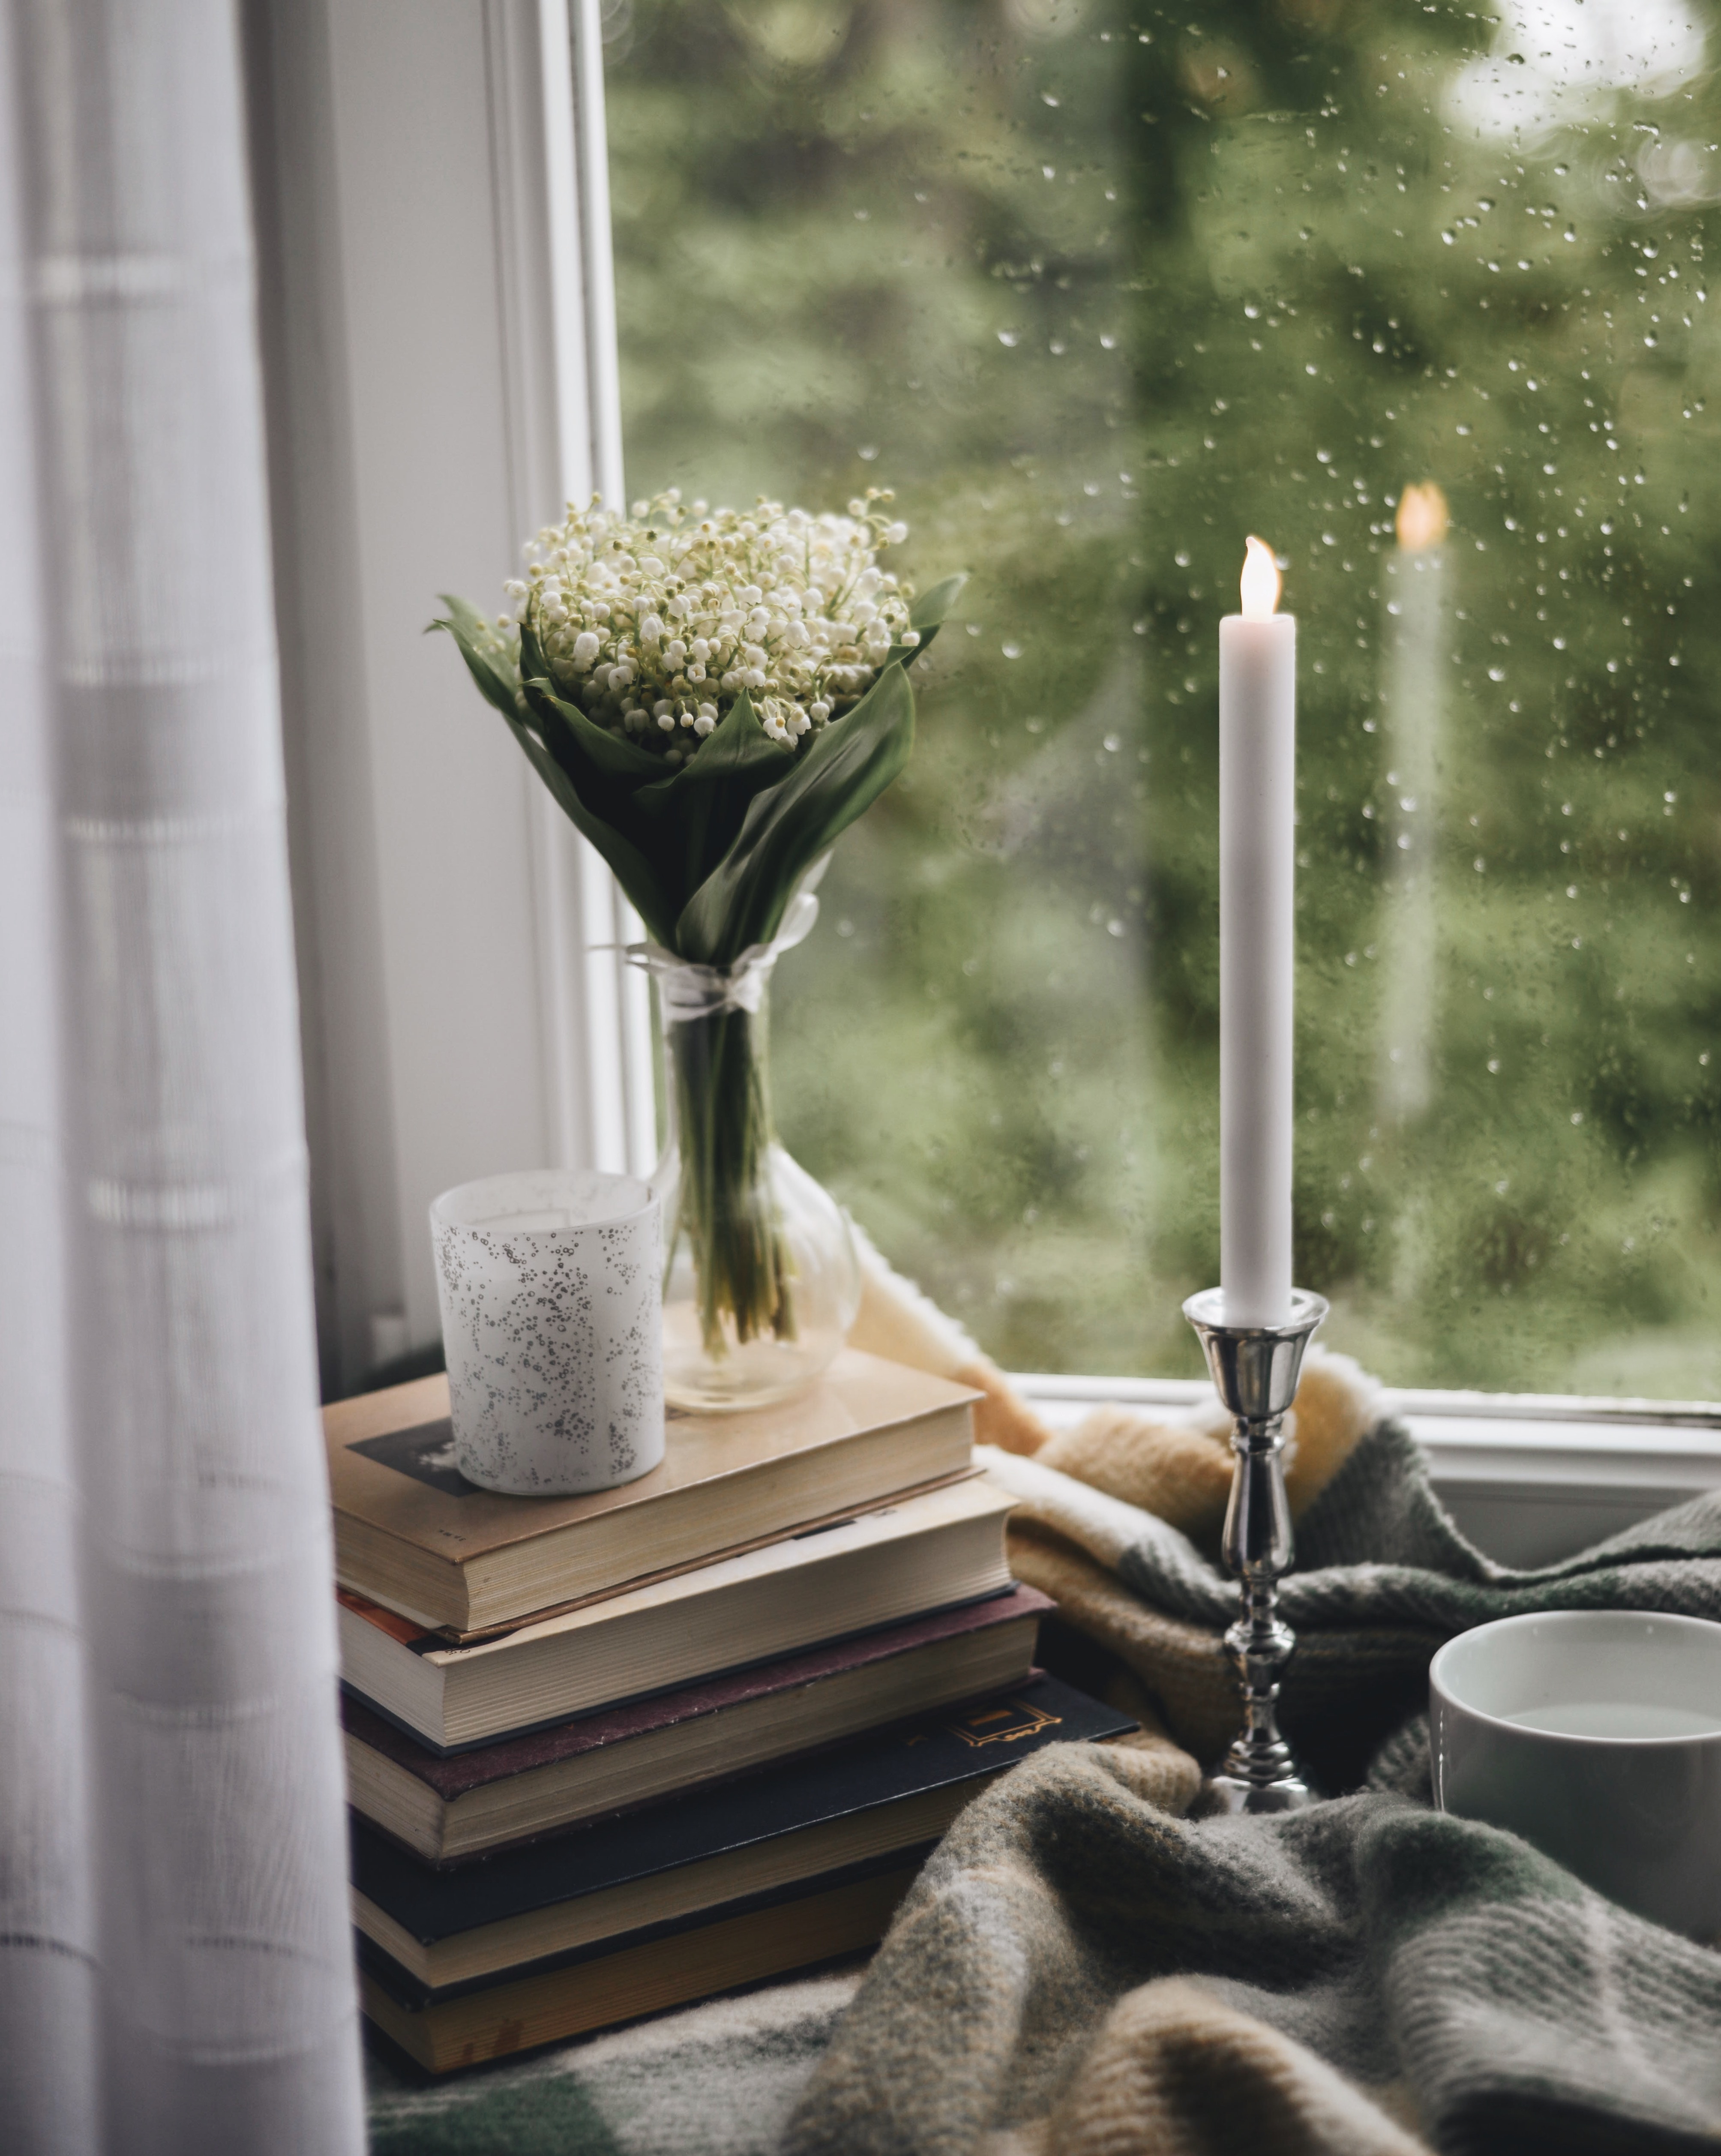 books, rain, miscellanea, miscellaneous, cup, bouquet, window, candle, plaid High Definition image